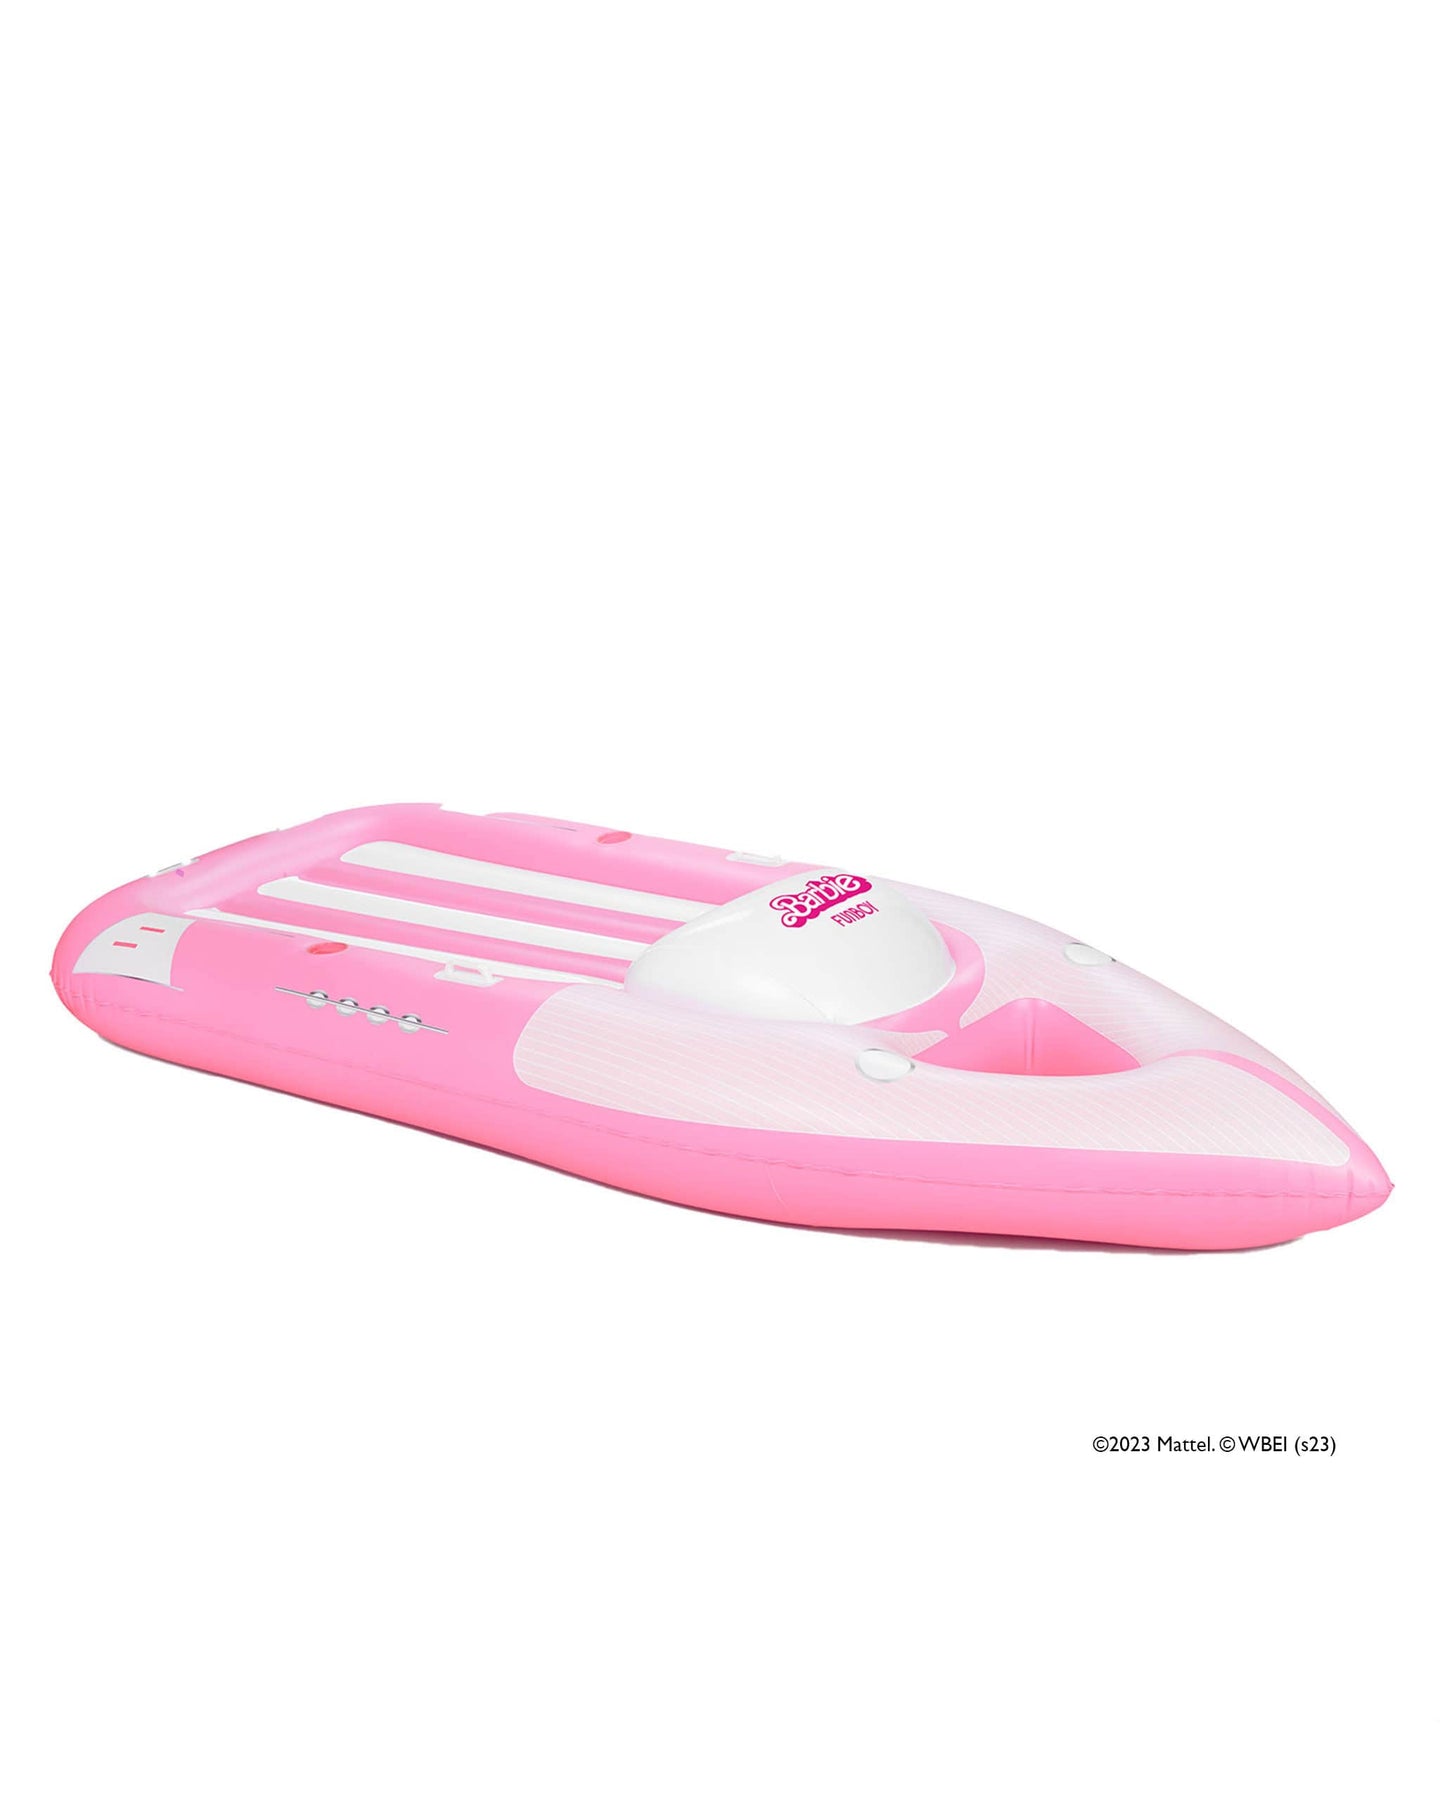 Barbie Yacht Pool Float